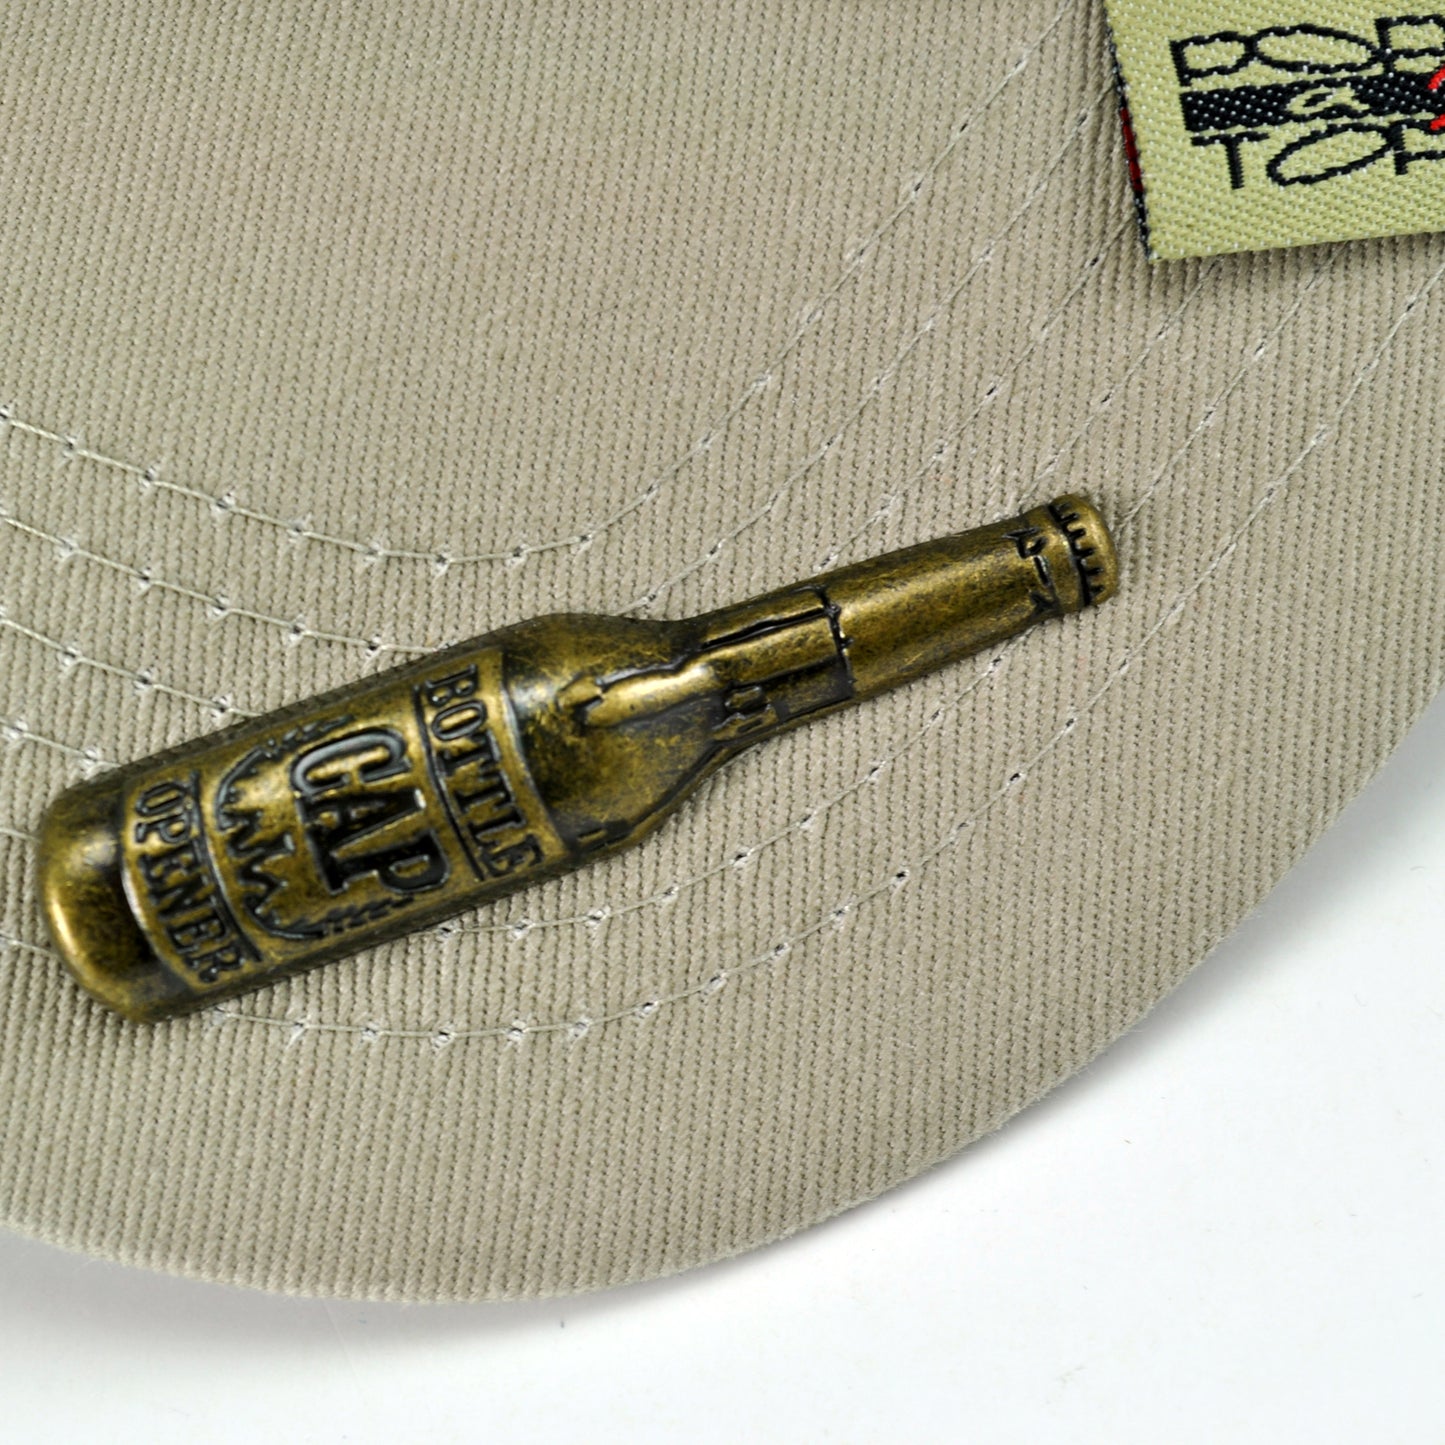 POP-A-TOP Snapback Hat with Bottle Opener in Beige